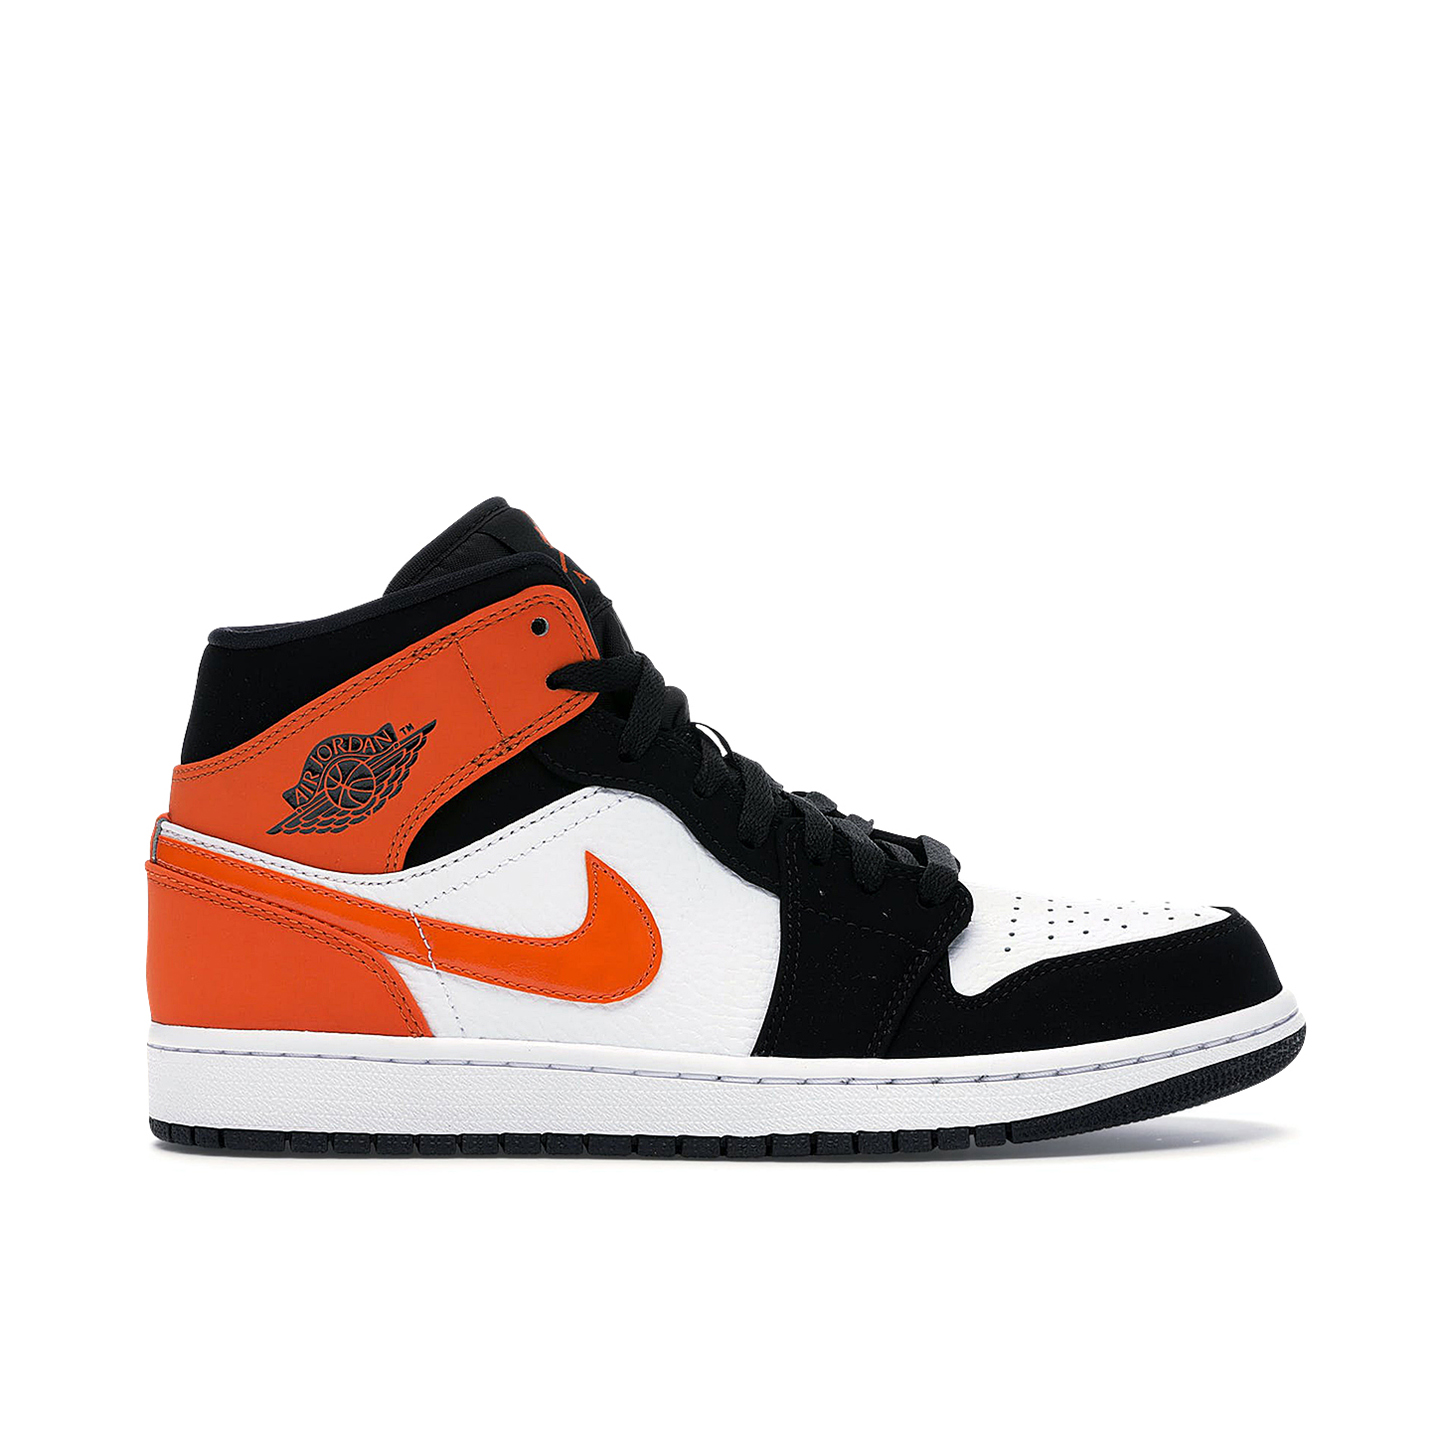 Orange Jordans | New Orange Air Jordans from Nike